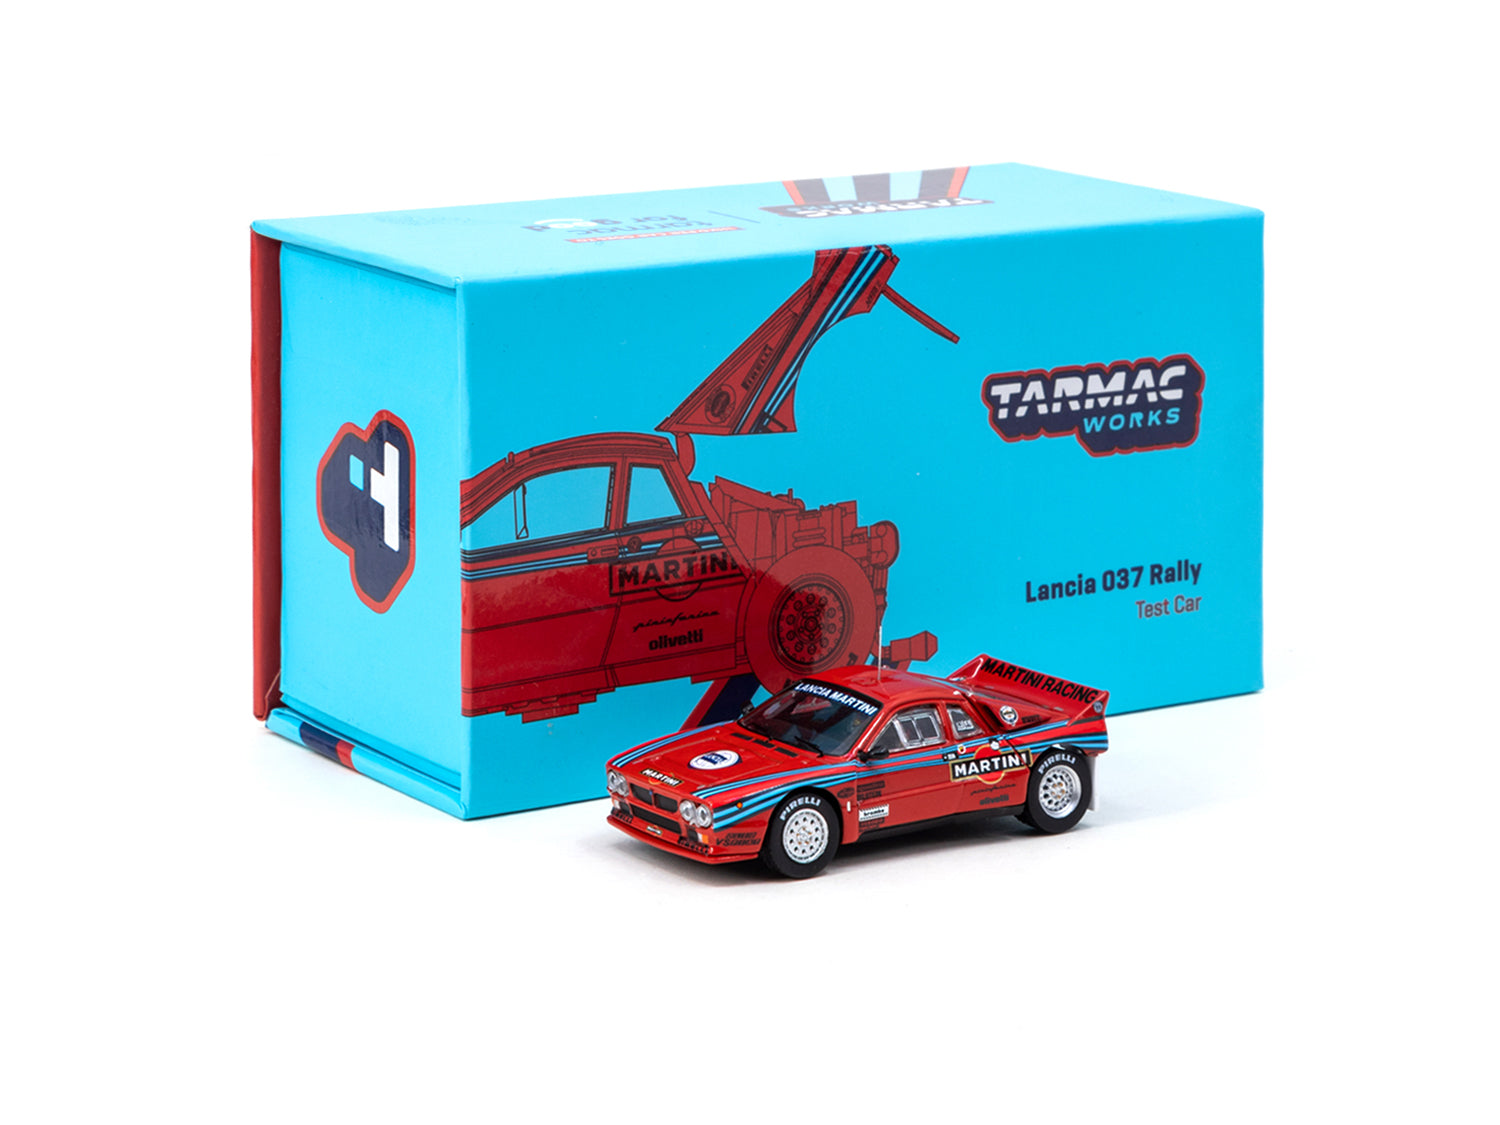 Tarmac Works Lancia 037 Test Car Hong Kong Exclusive Tarmacworks